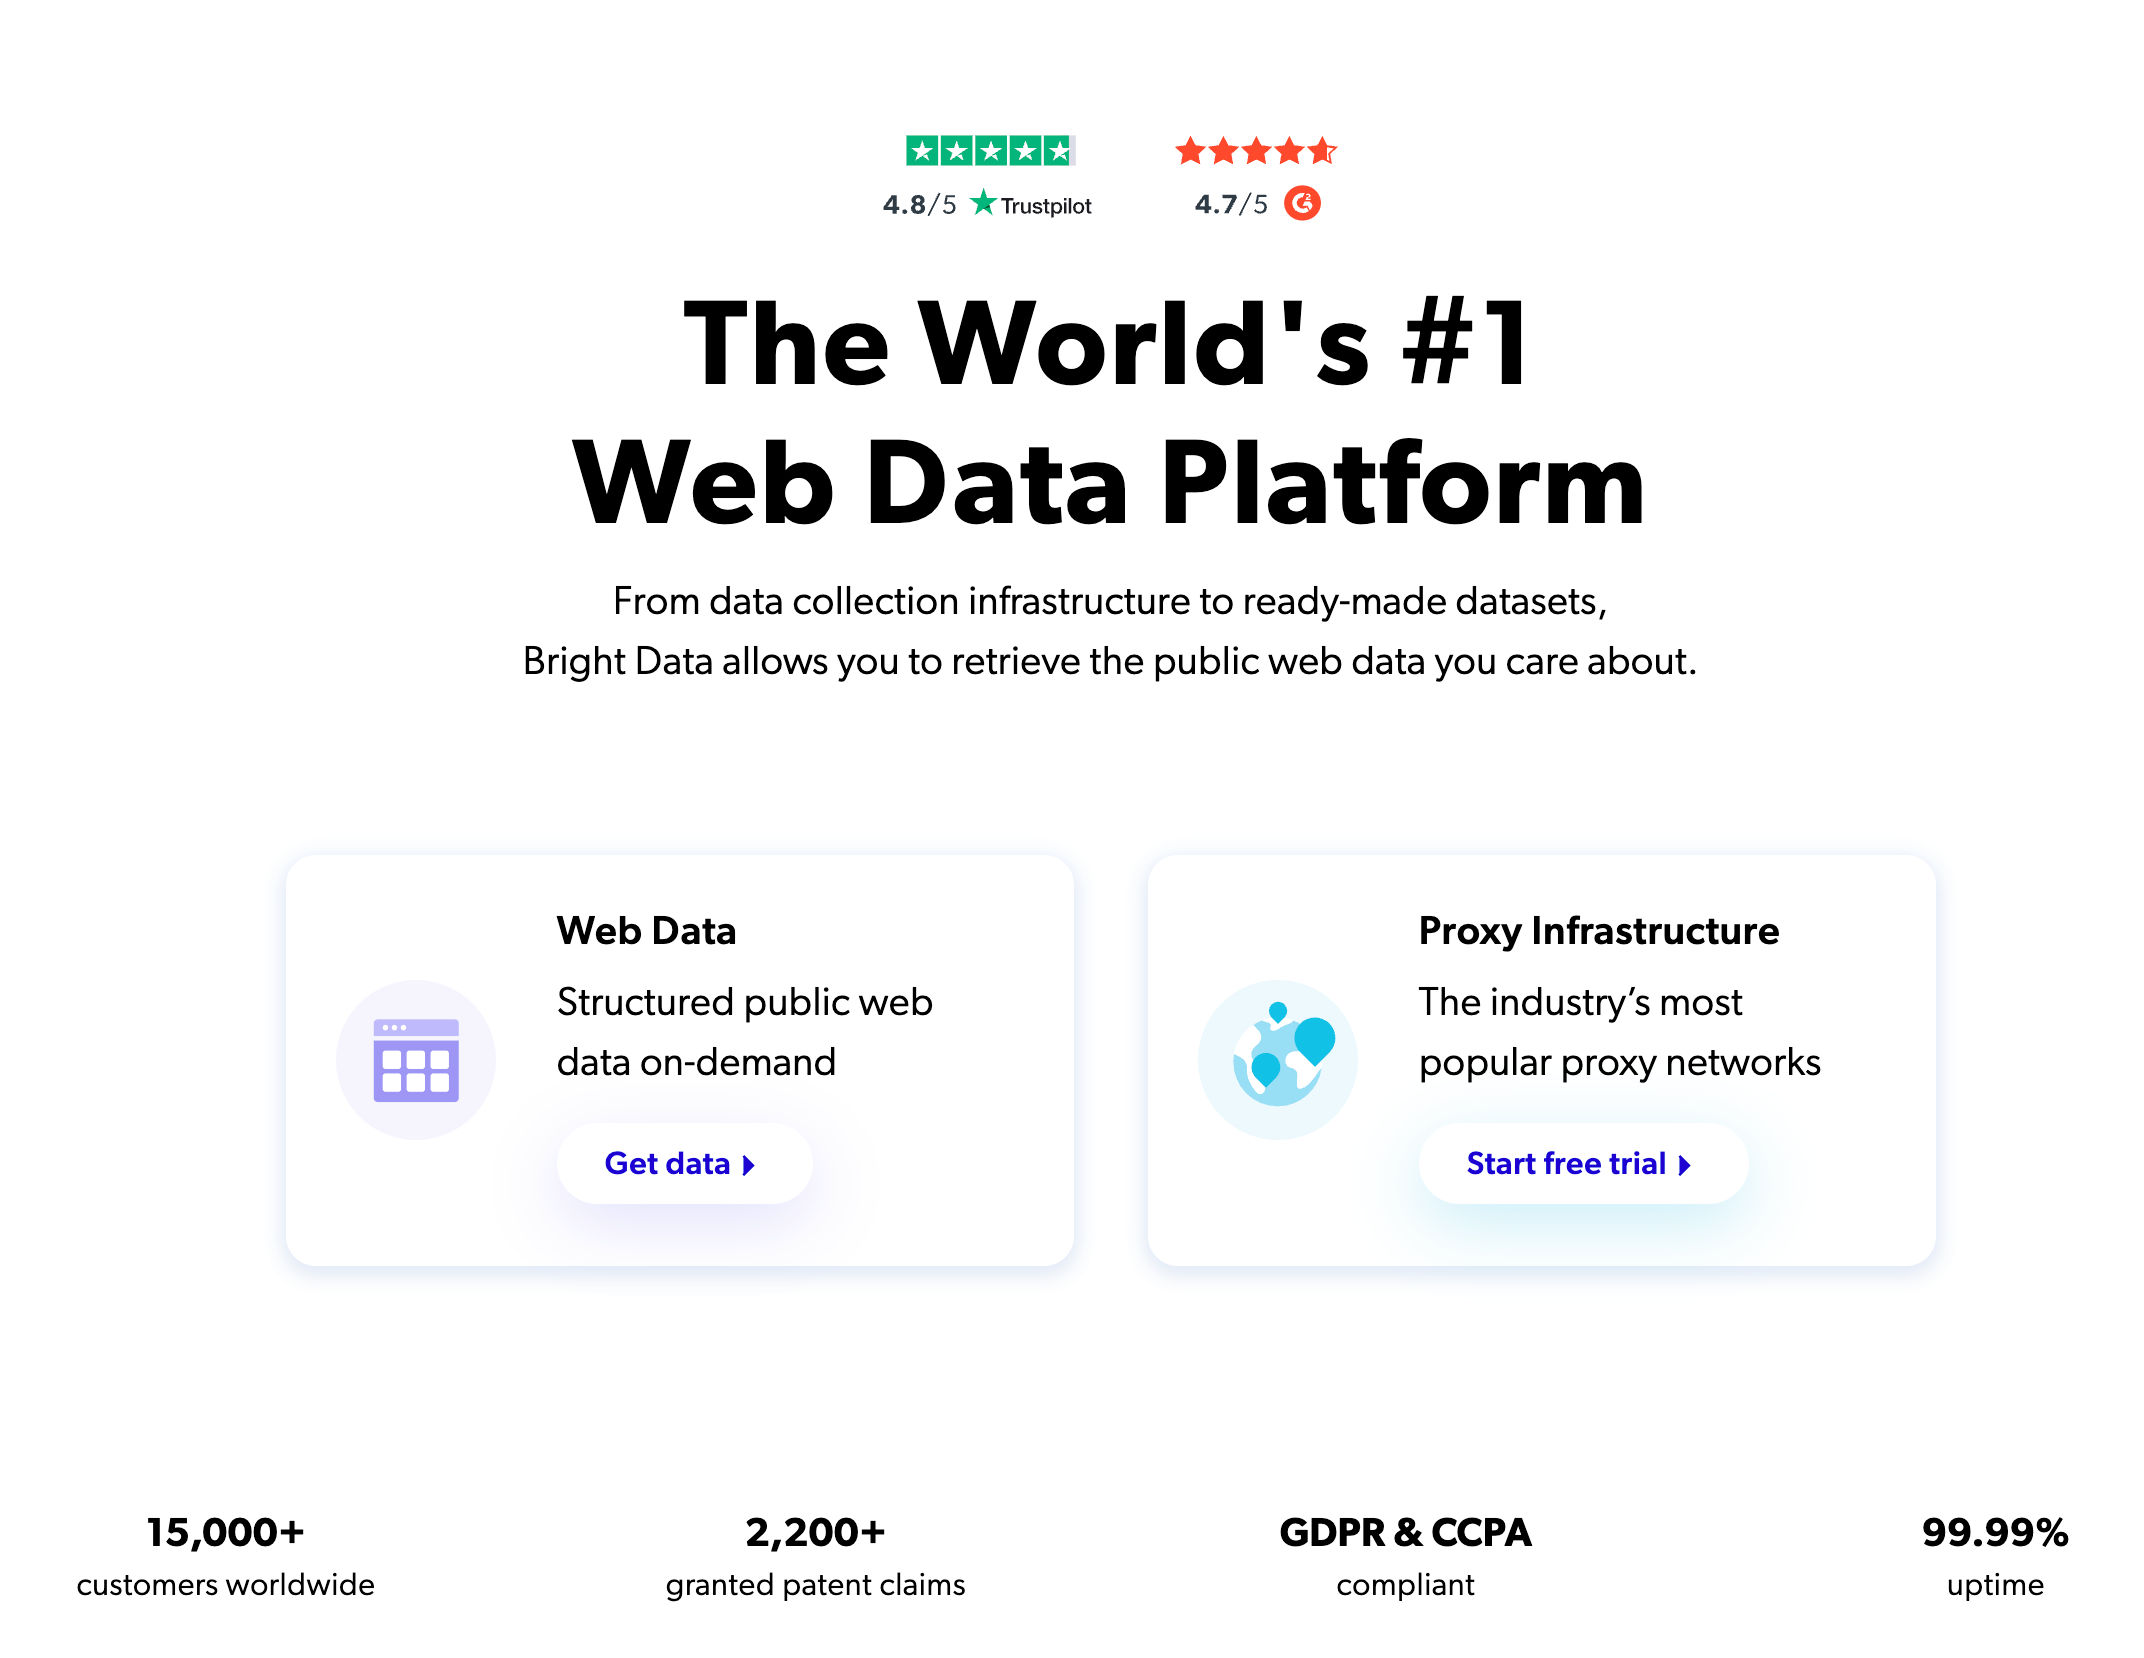 Bright Data - The World's #1 Web Data Platform in 2022